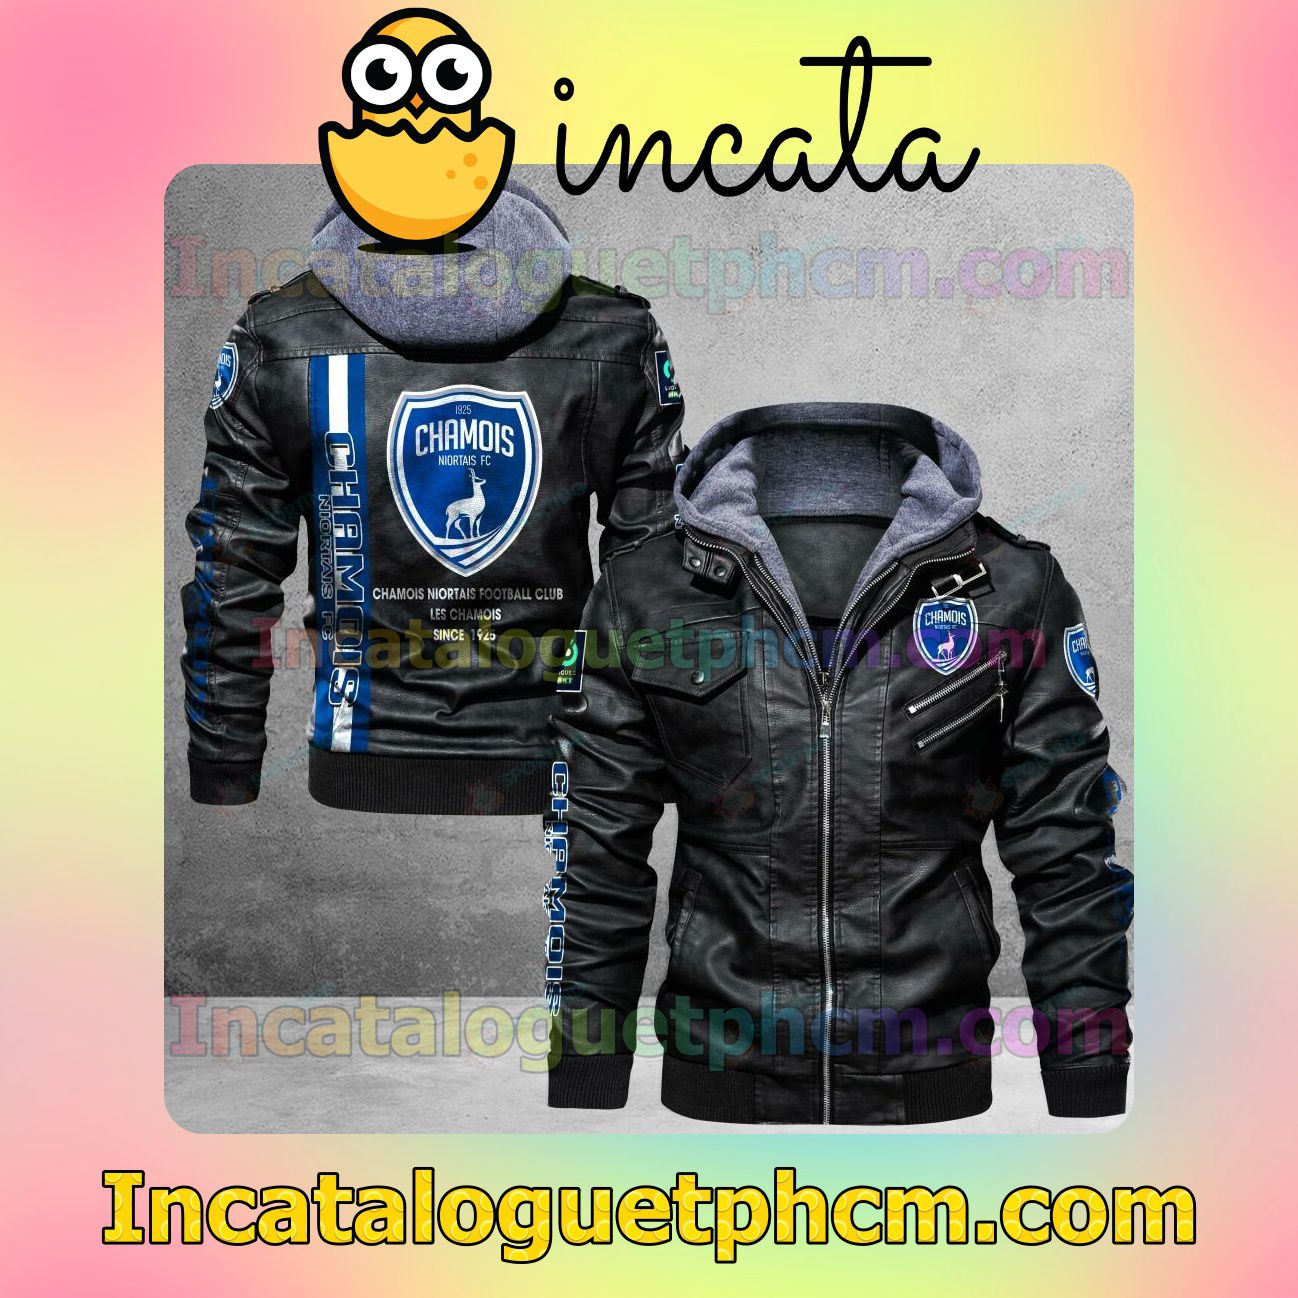 Chamois Niortais FC Brand Uniform Leather Jacket